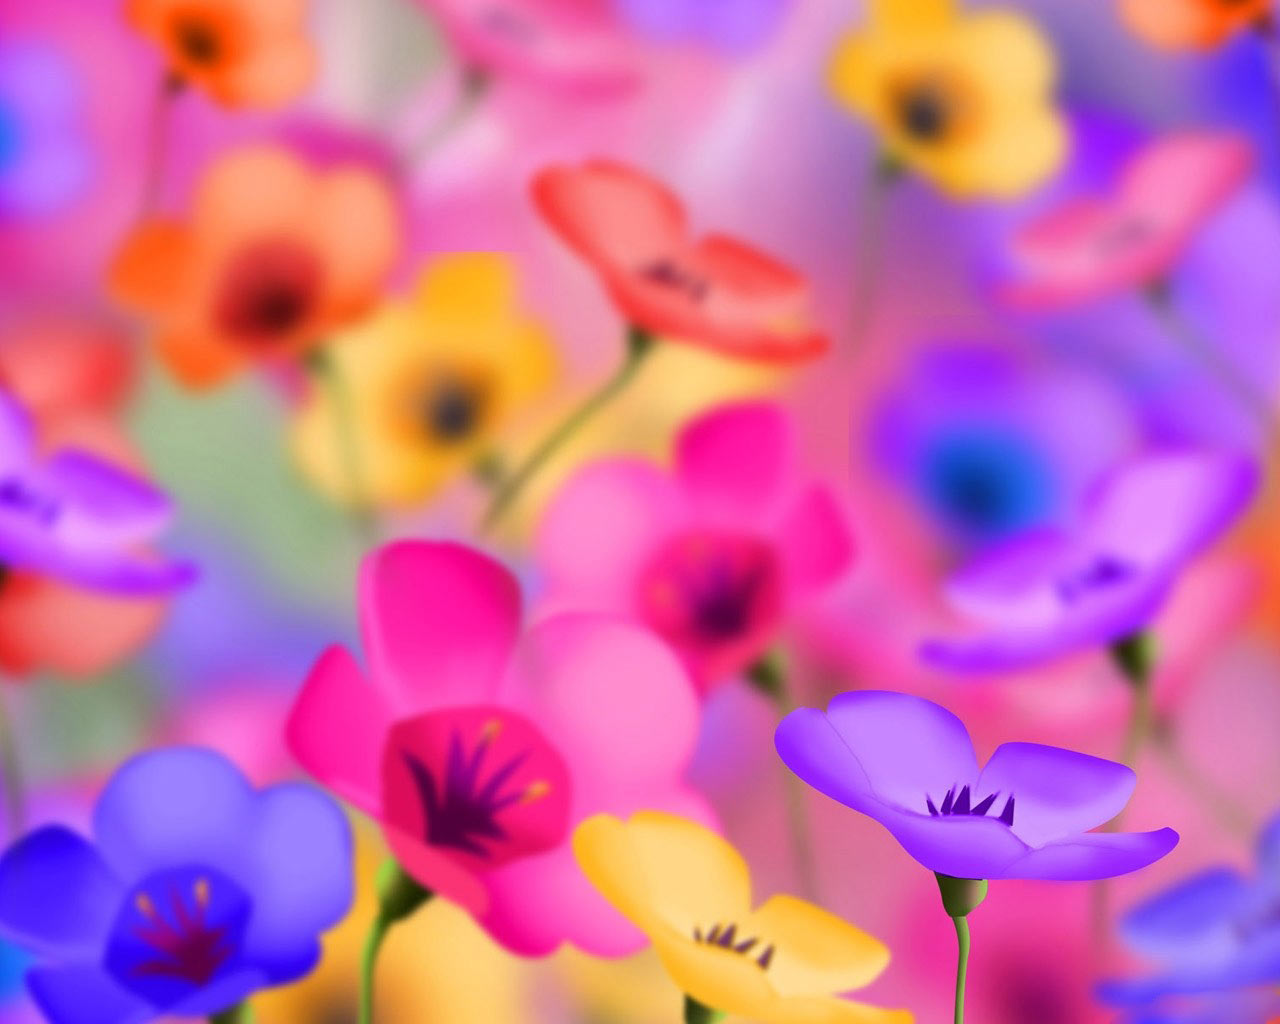 Flowers background | Flower wallpaper | images of flower | #1